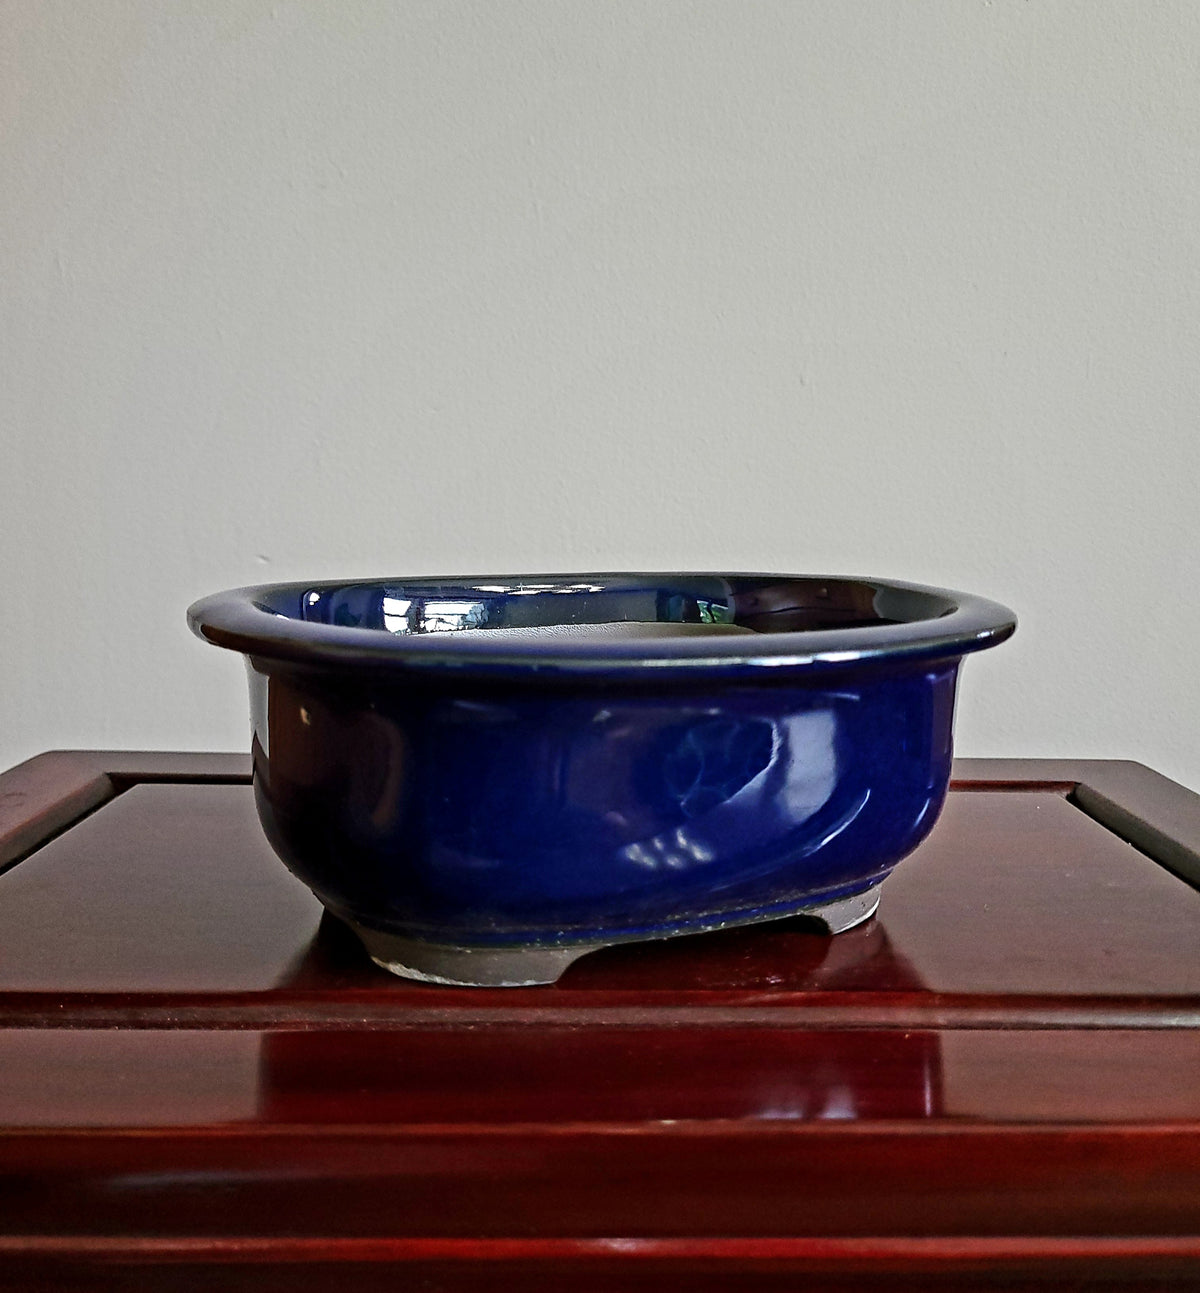 7" Japanese oval tub style bonsai pot with lip